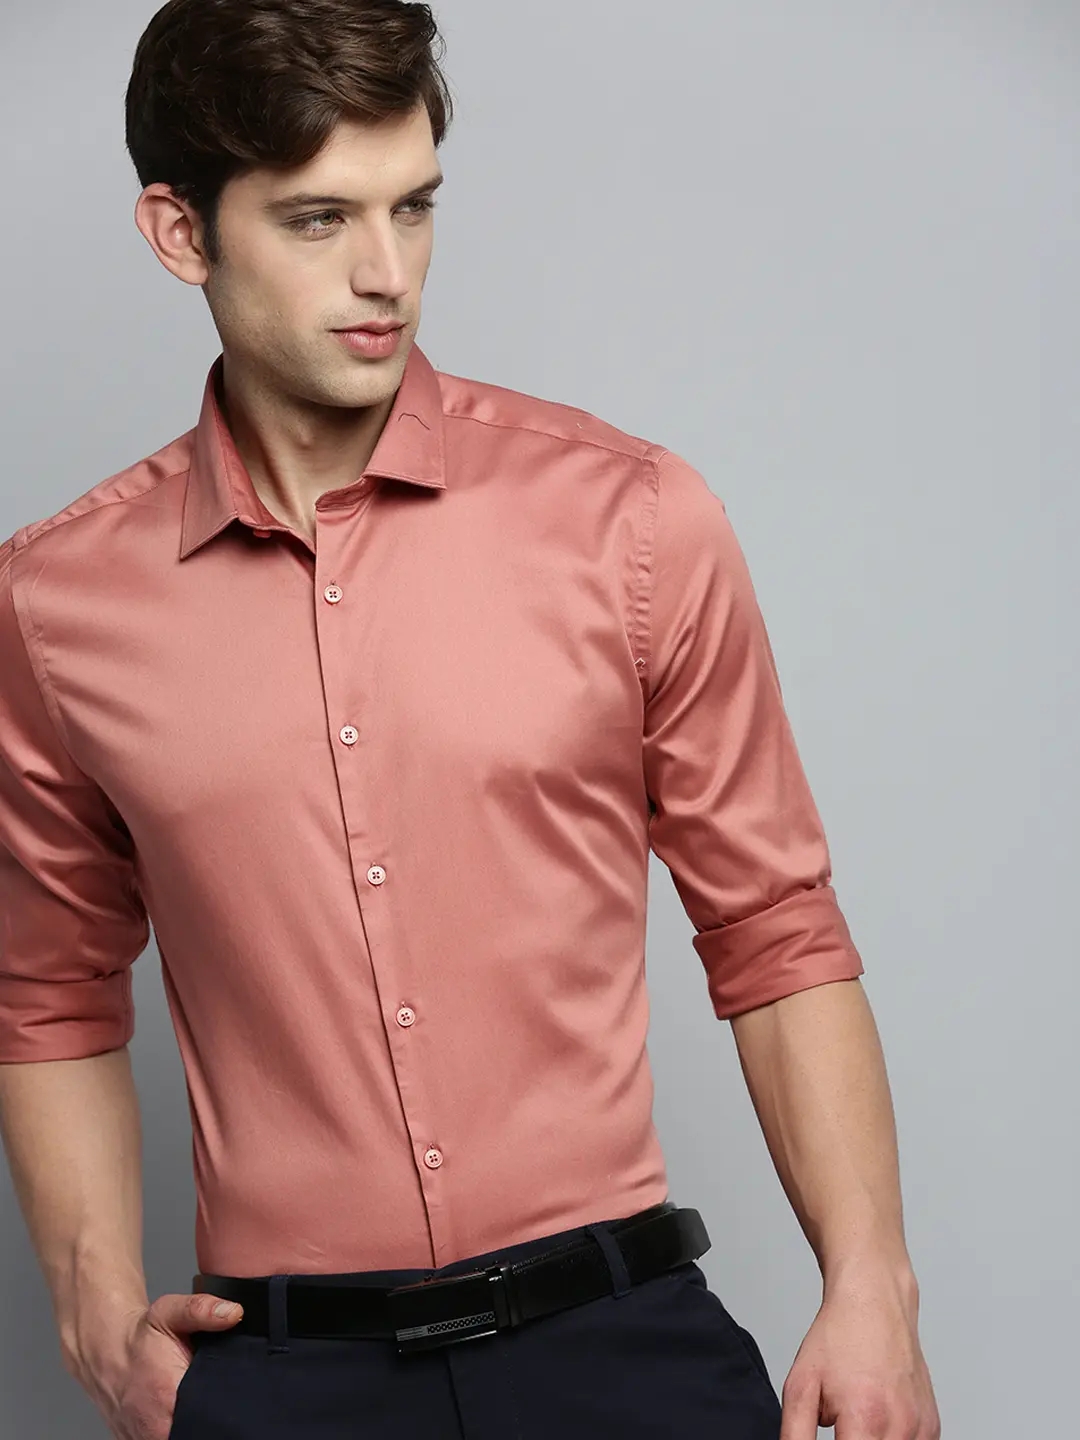 SHOWOFF Men's Spread Collar Solid Coral Smart Shirt